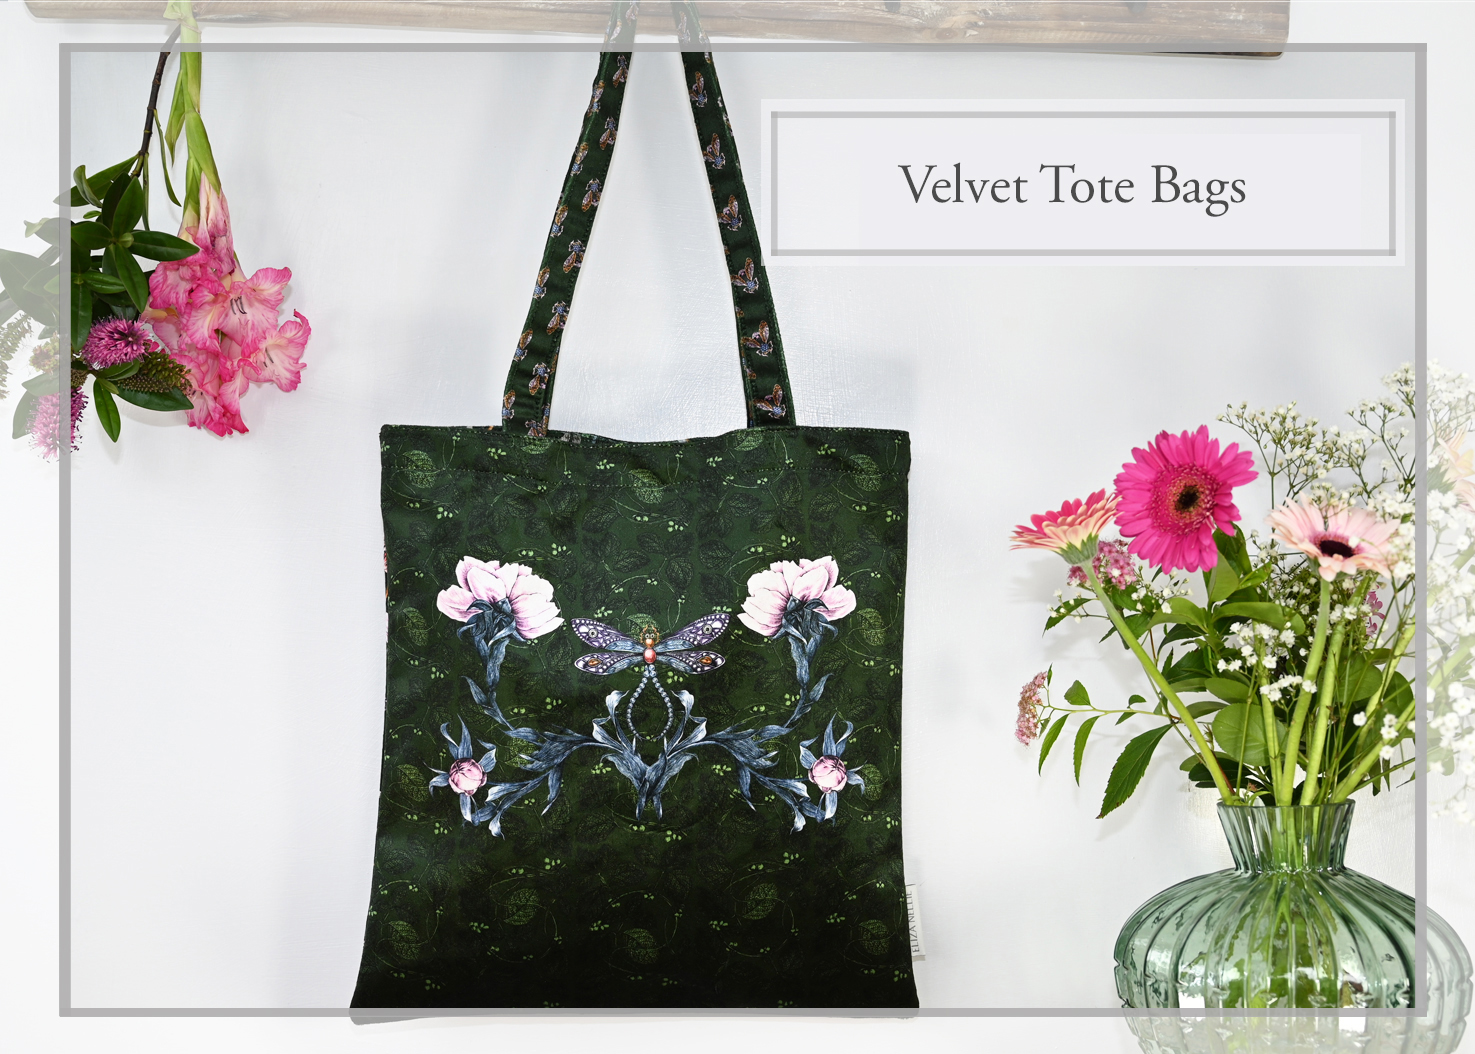 Velvet tote bags, made in the UK